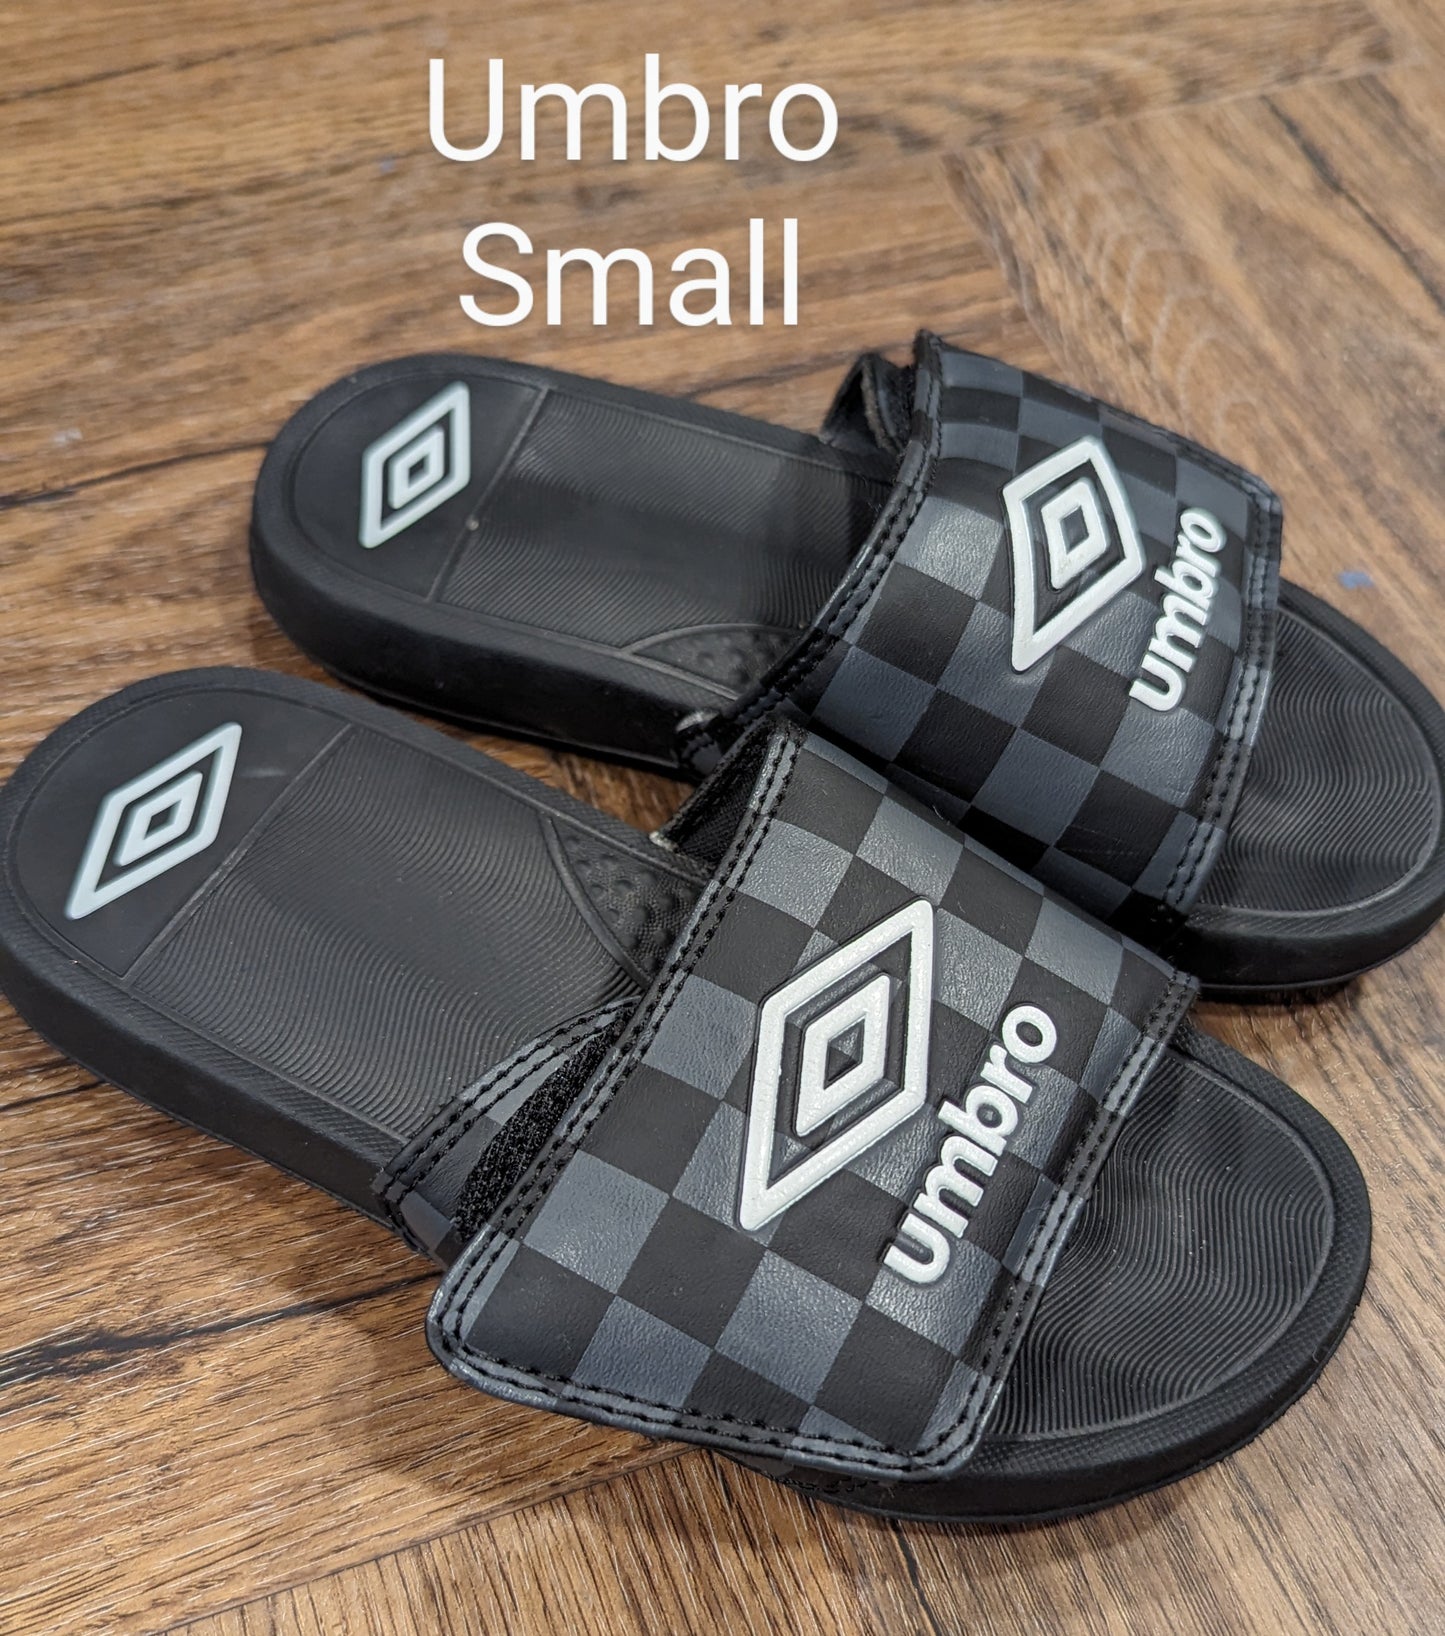 Umbro black slide sandals, small